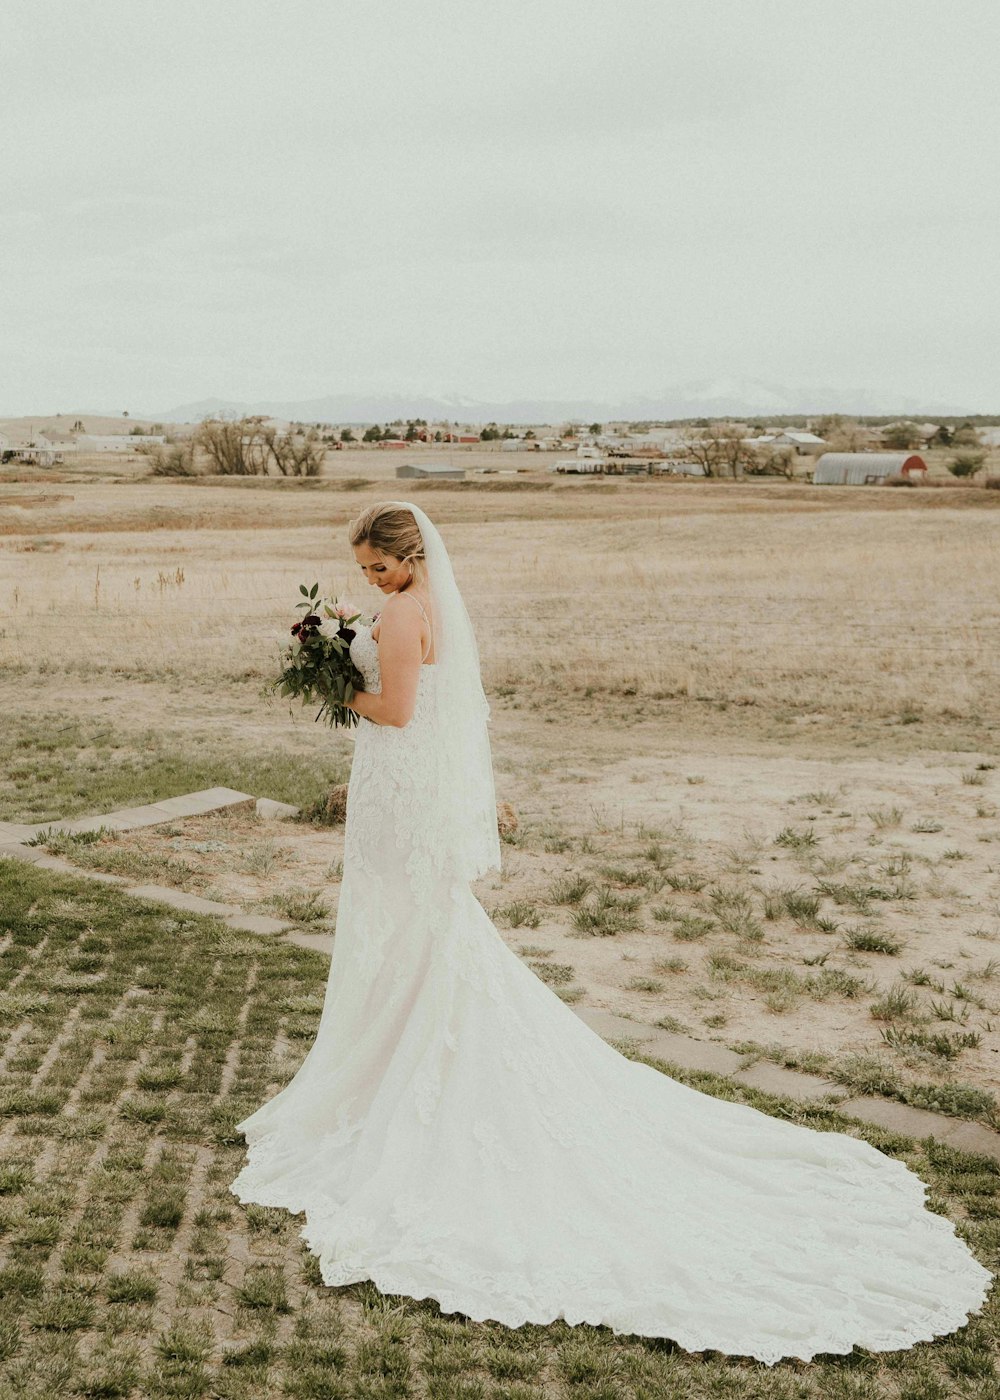 a woman in a wedding dress standing in a field